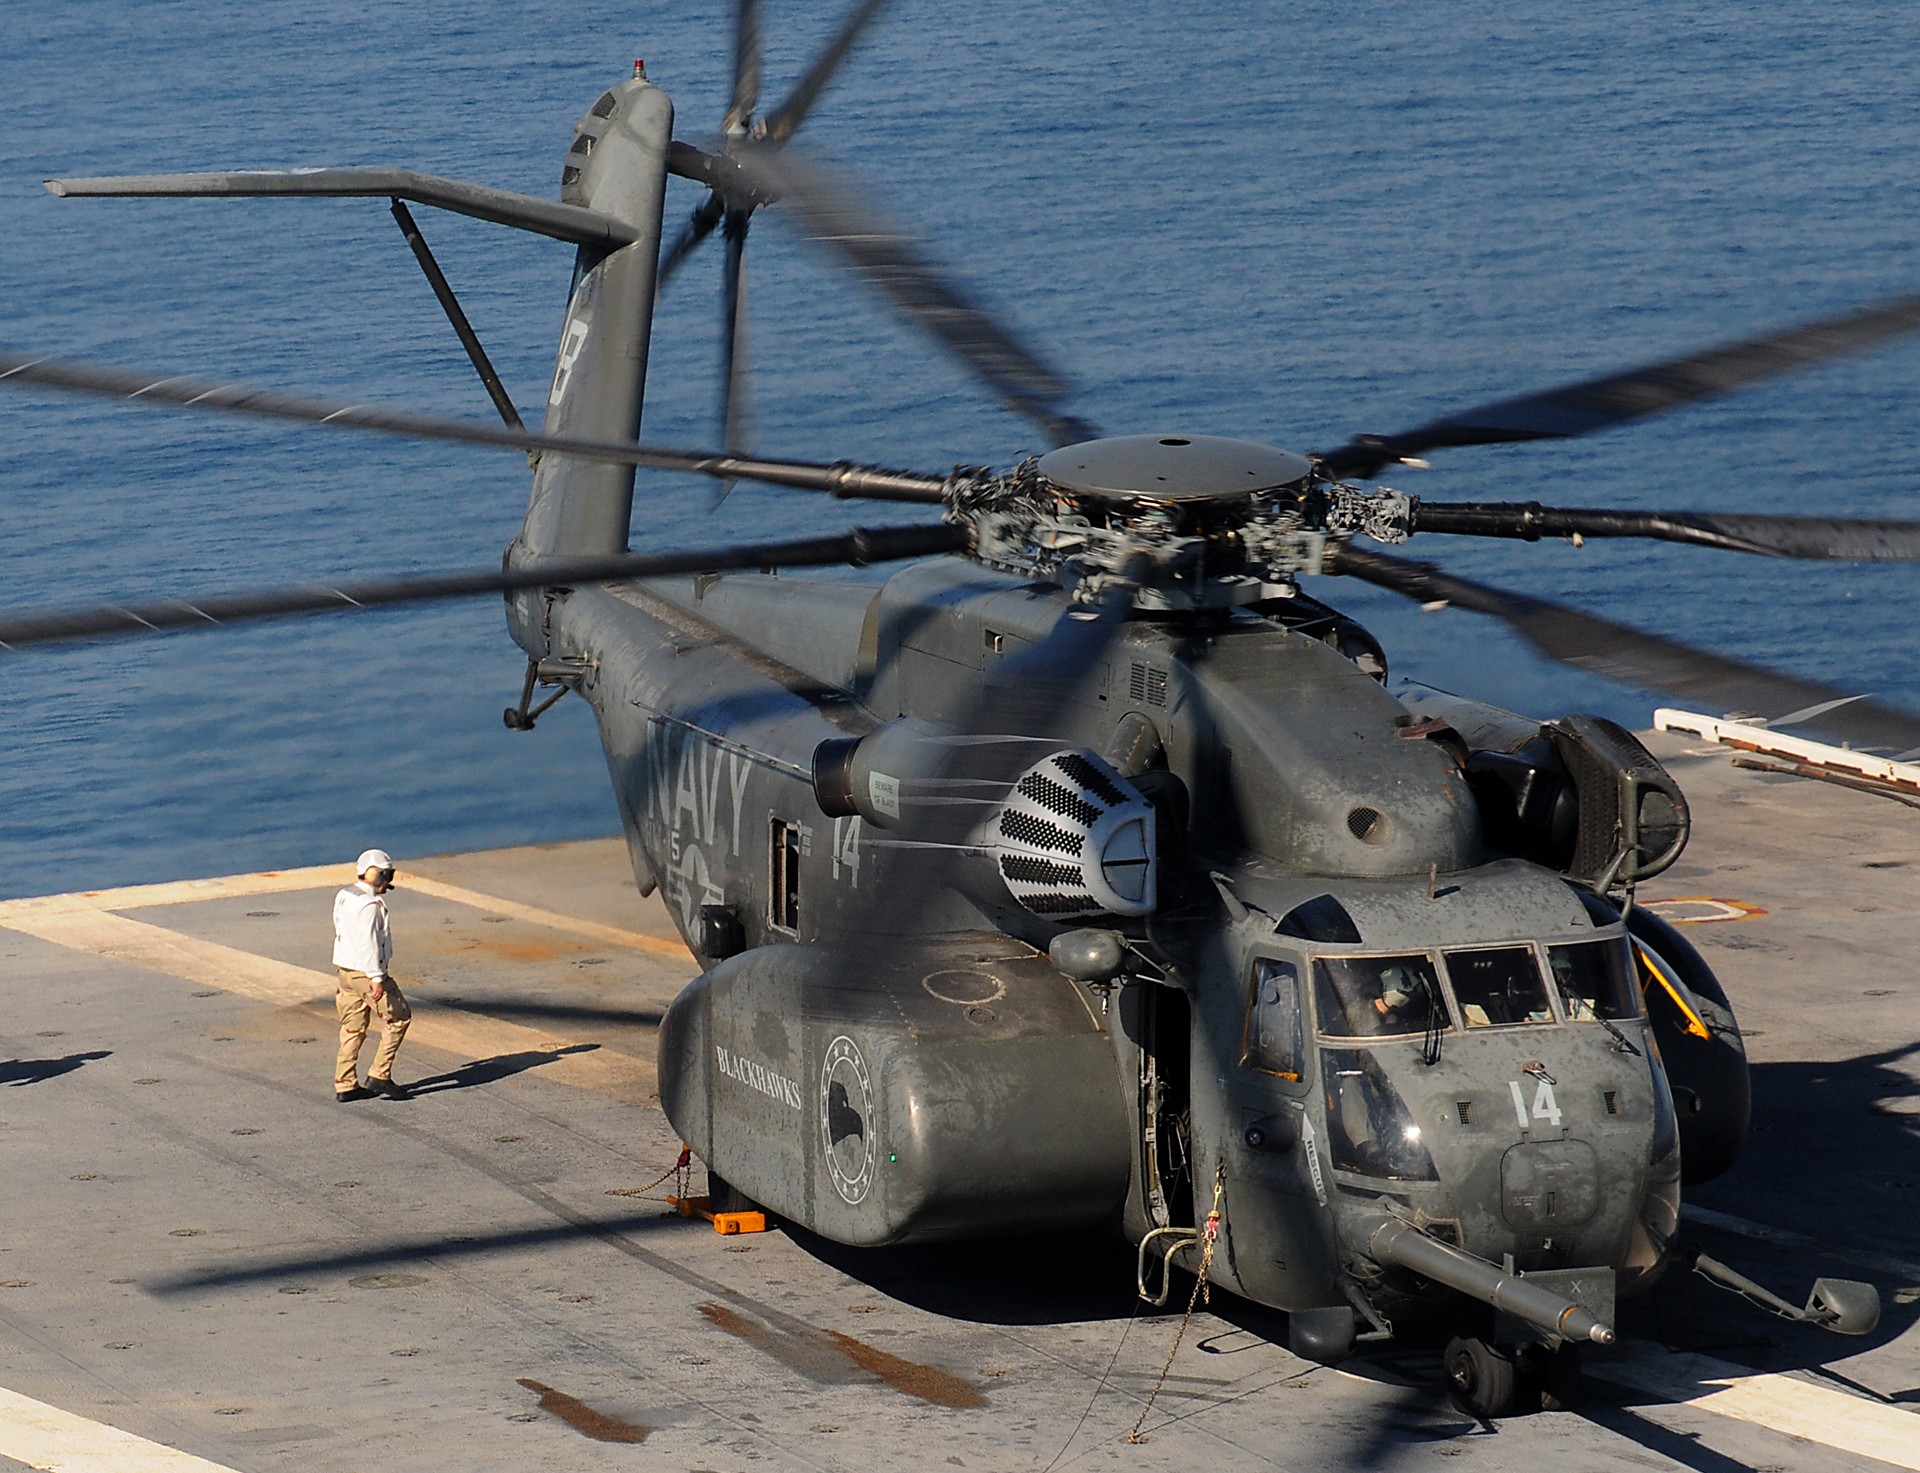 hm-15 blackhawks helicopter mine countermeasures squadron navy mh-53e sea dragon 62